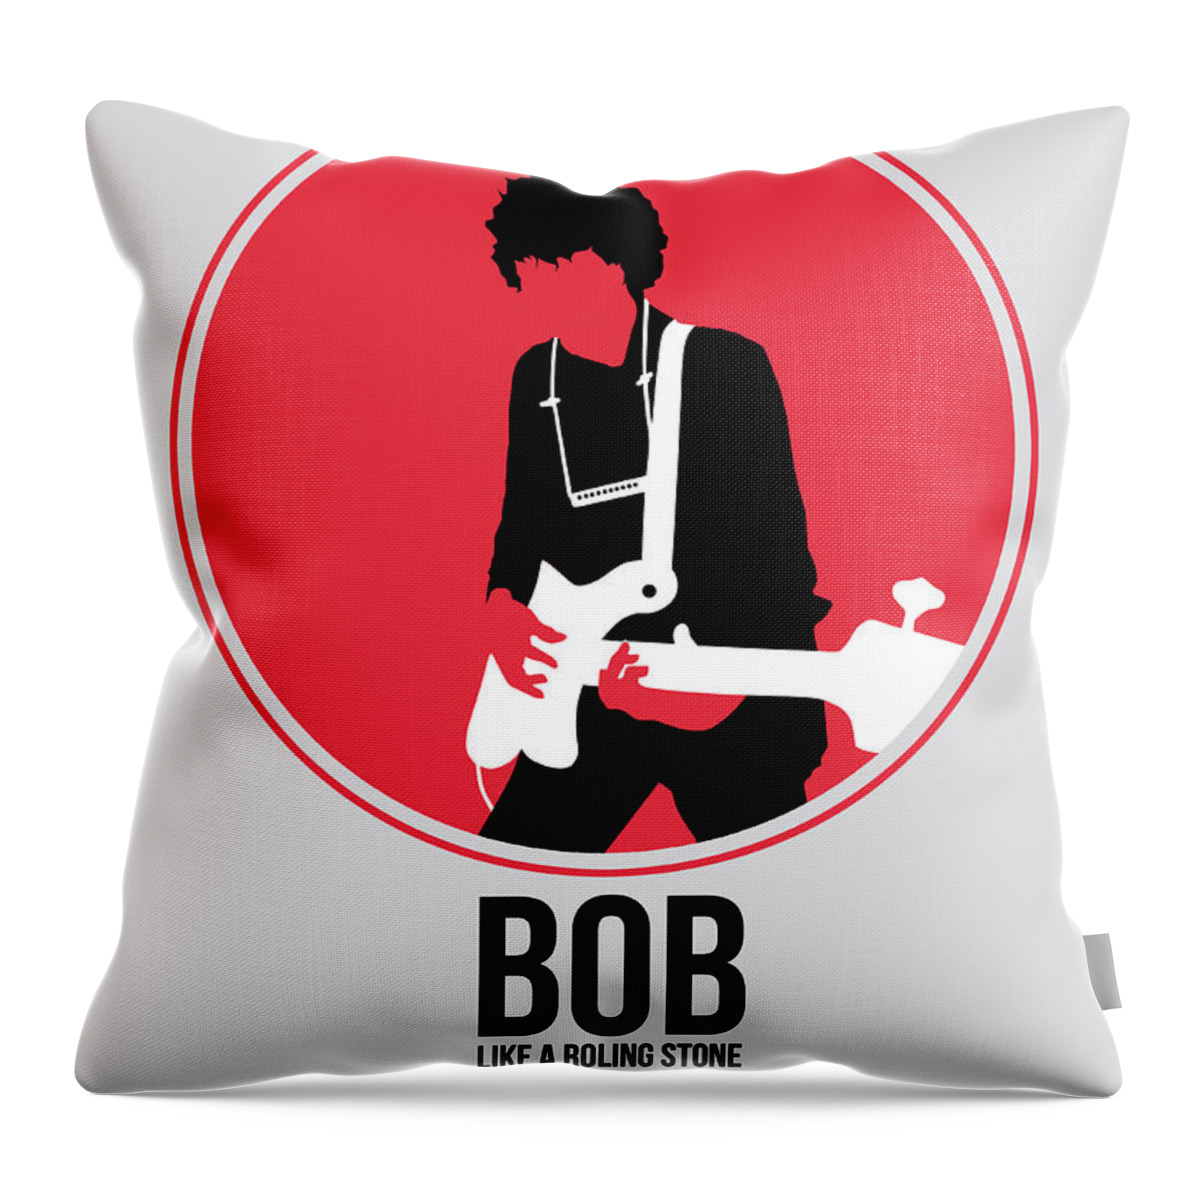 Bob Dylan Throw Pillow featuring the digital art Bob Dylan by Naxart Studio